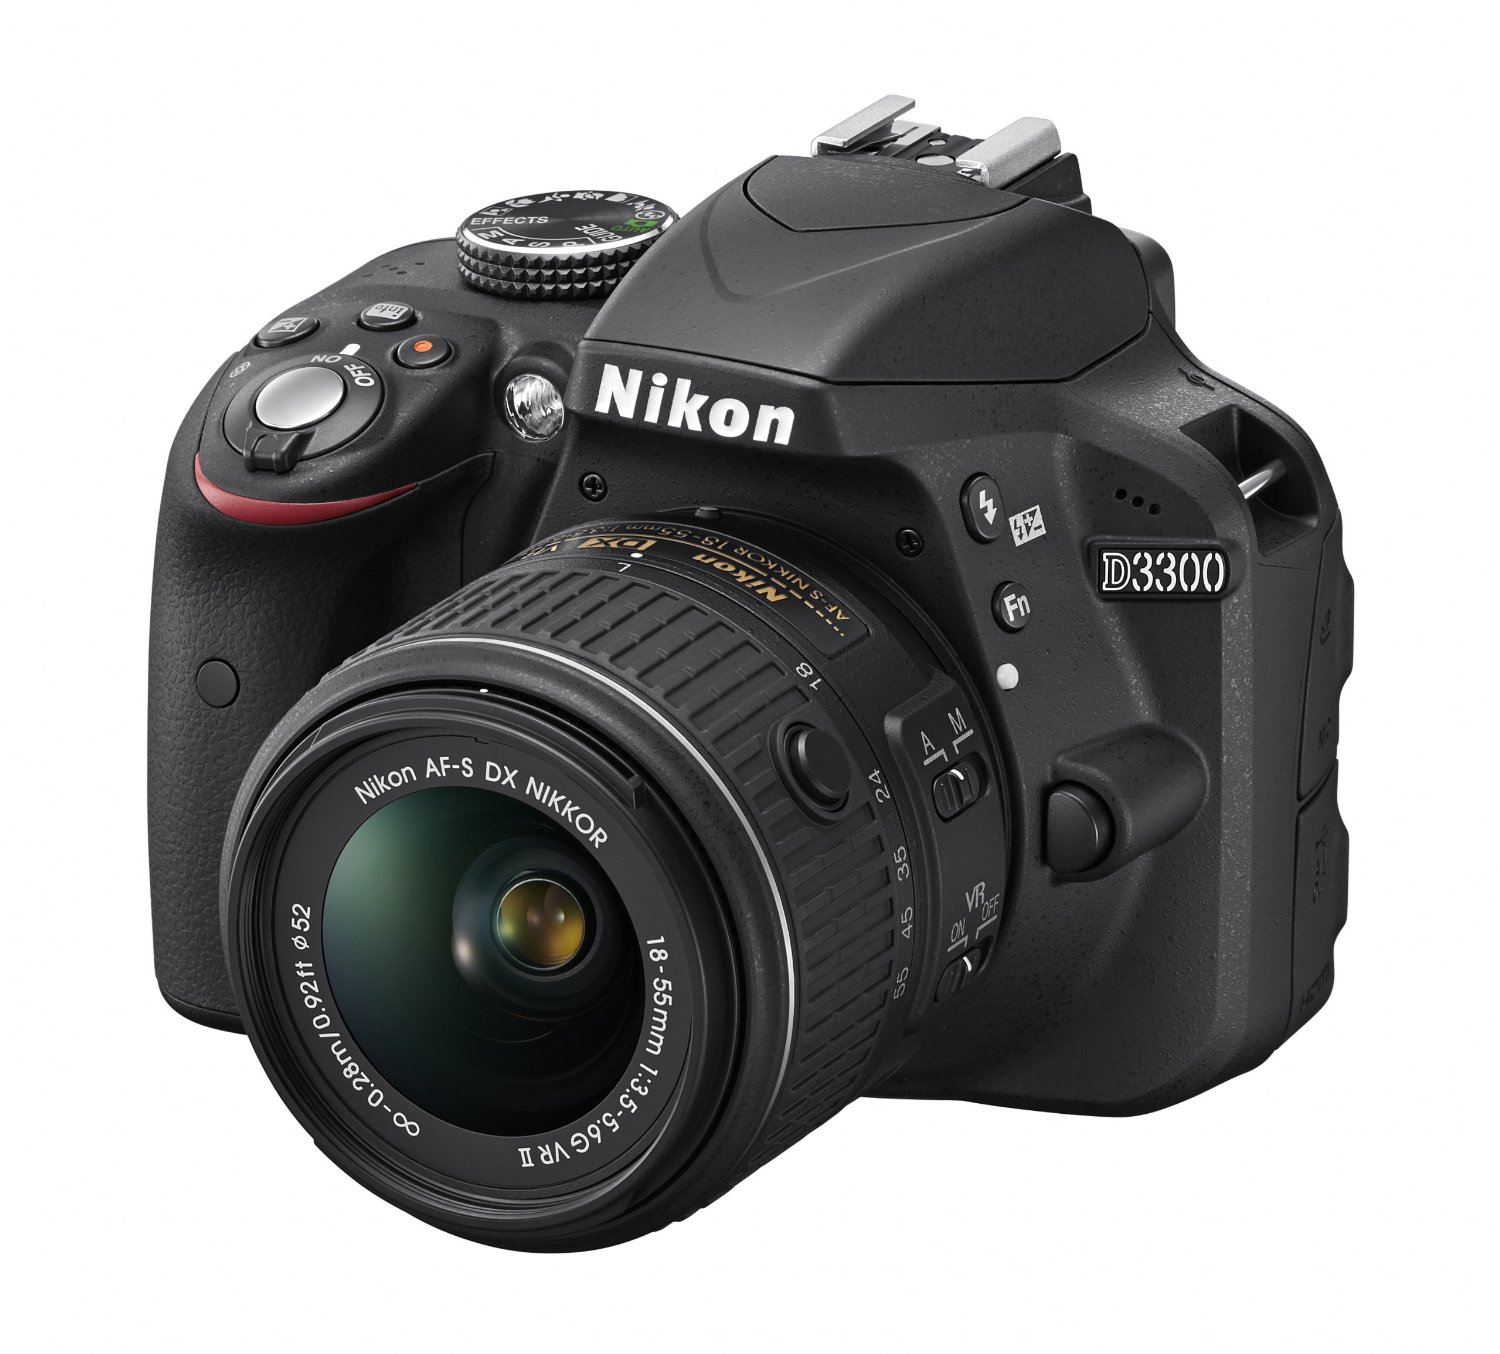 Camara Nikon D3300 24.2 MP CMOS Digital SLR /Auto Focus-S DX NIKKOR 18-55mm f/3.5-5.6G VR II Zoom Lens